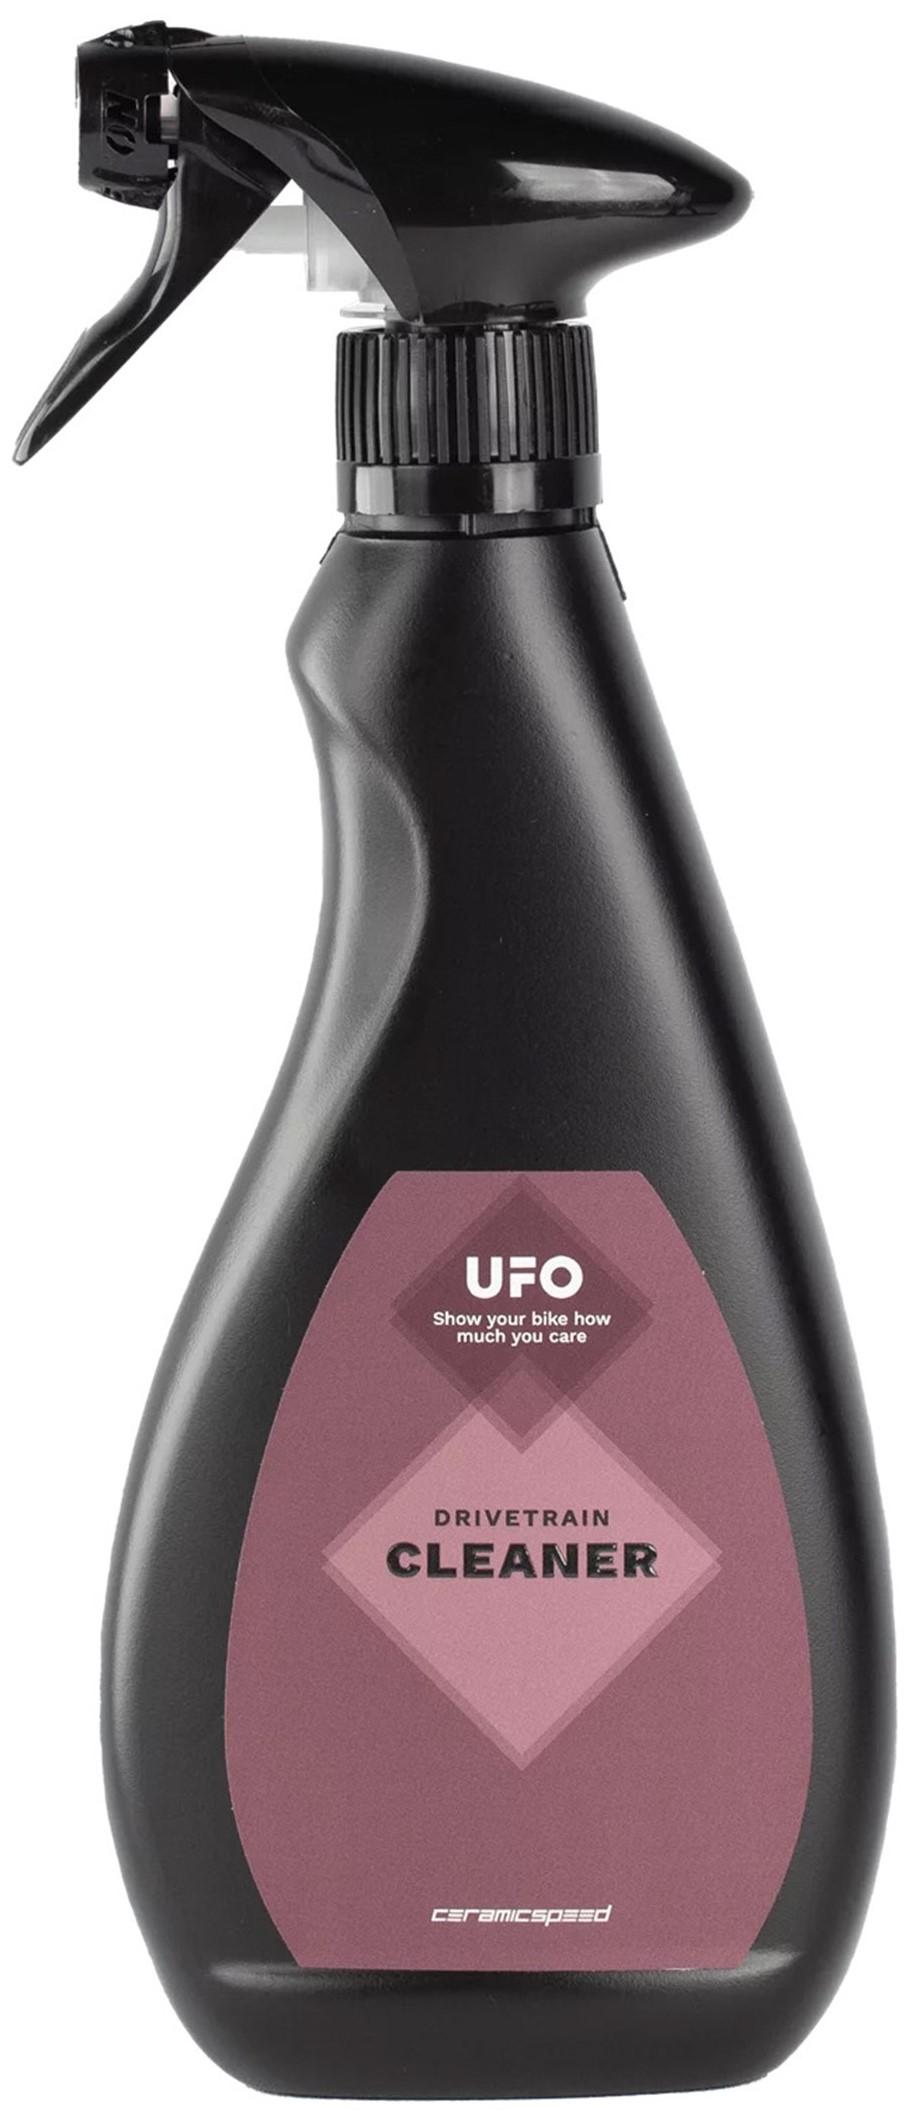 Ceramicspeed Ufo Drivetrain Cleaner - Black